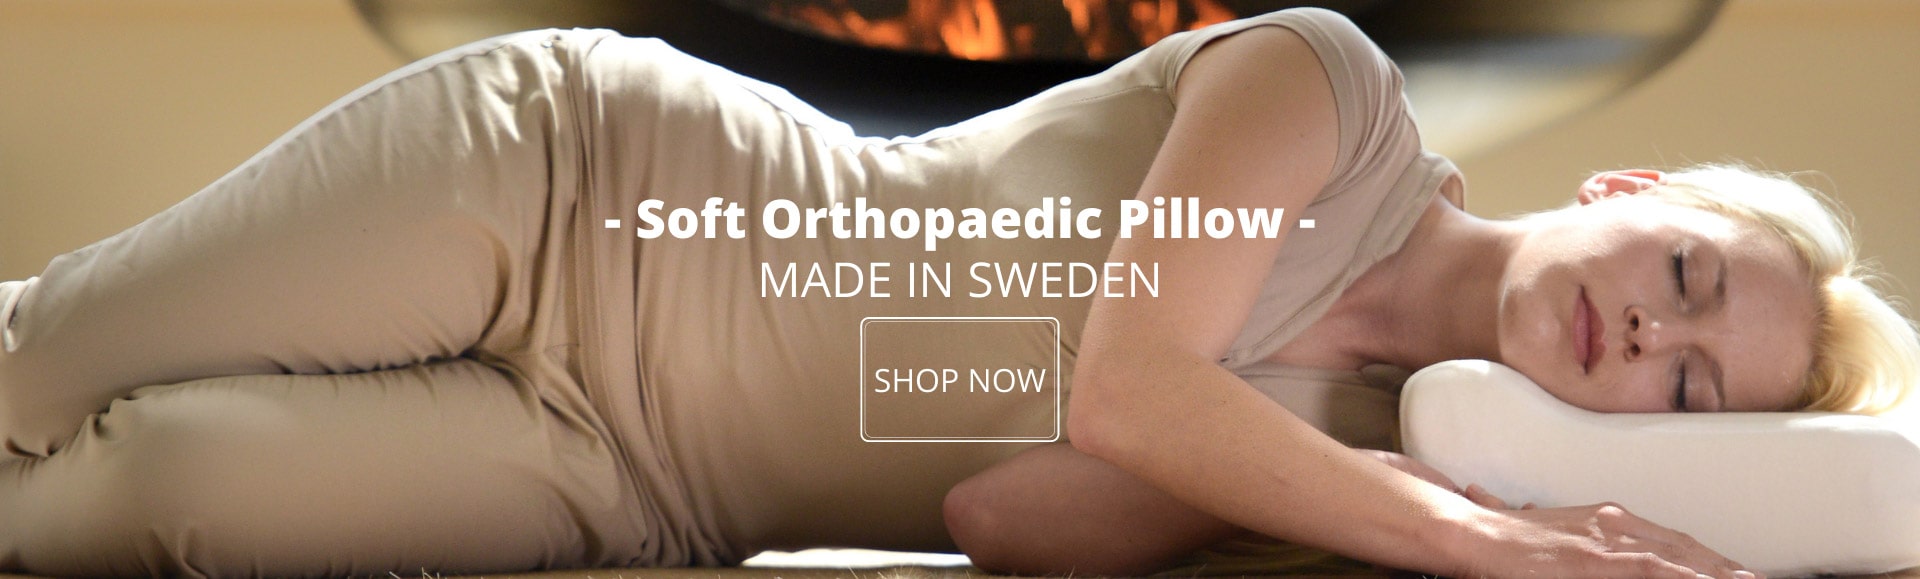 Soft Orthopaedic Pillow